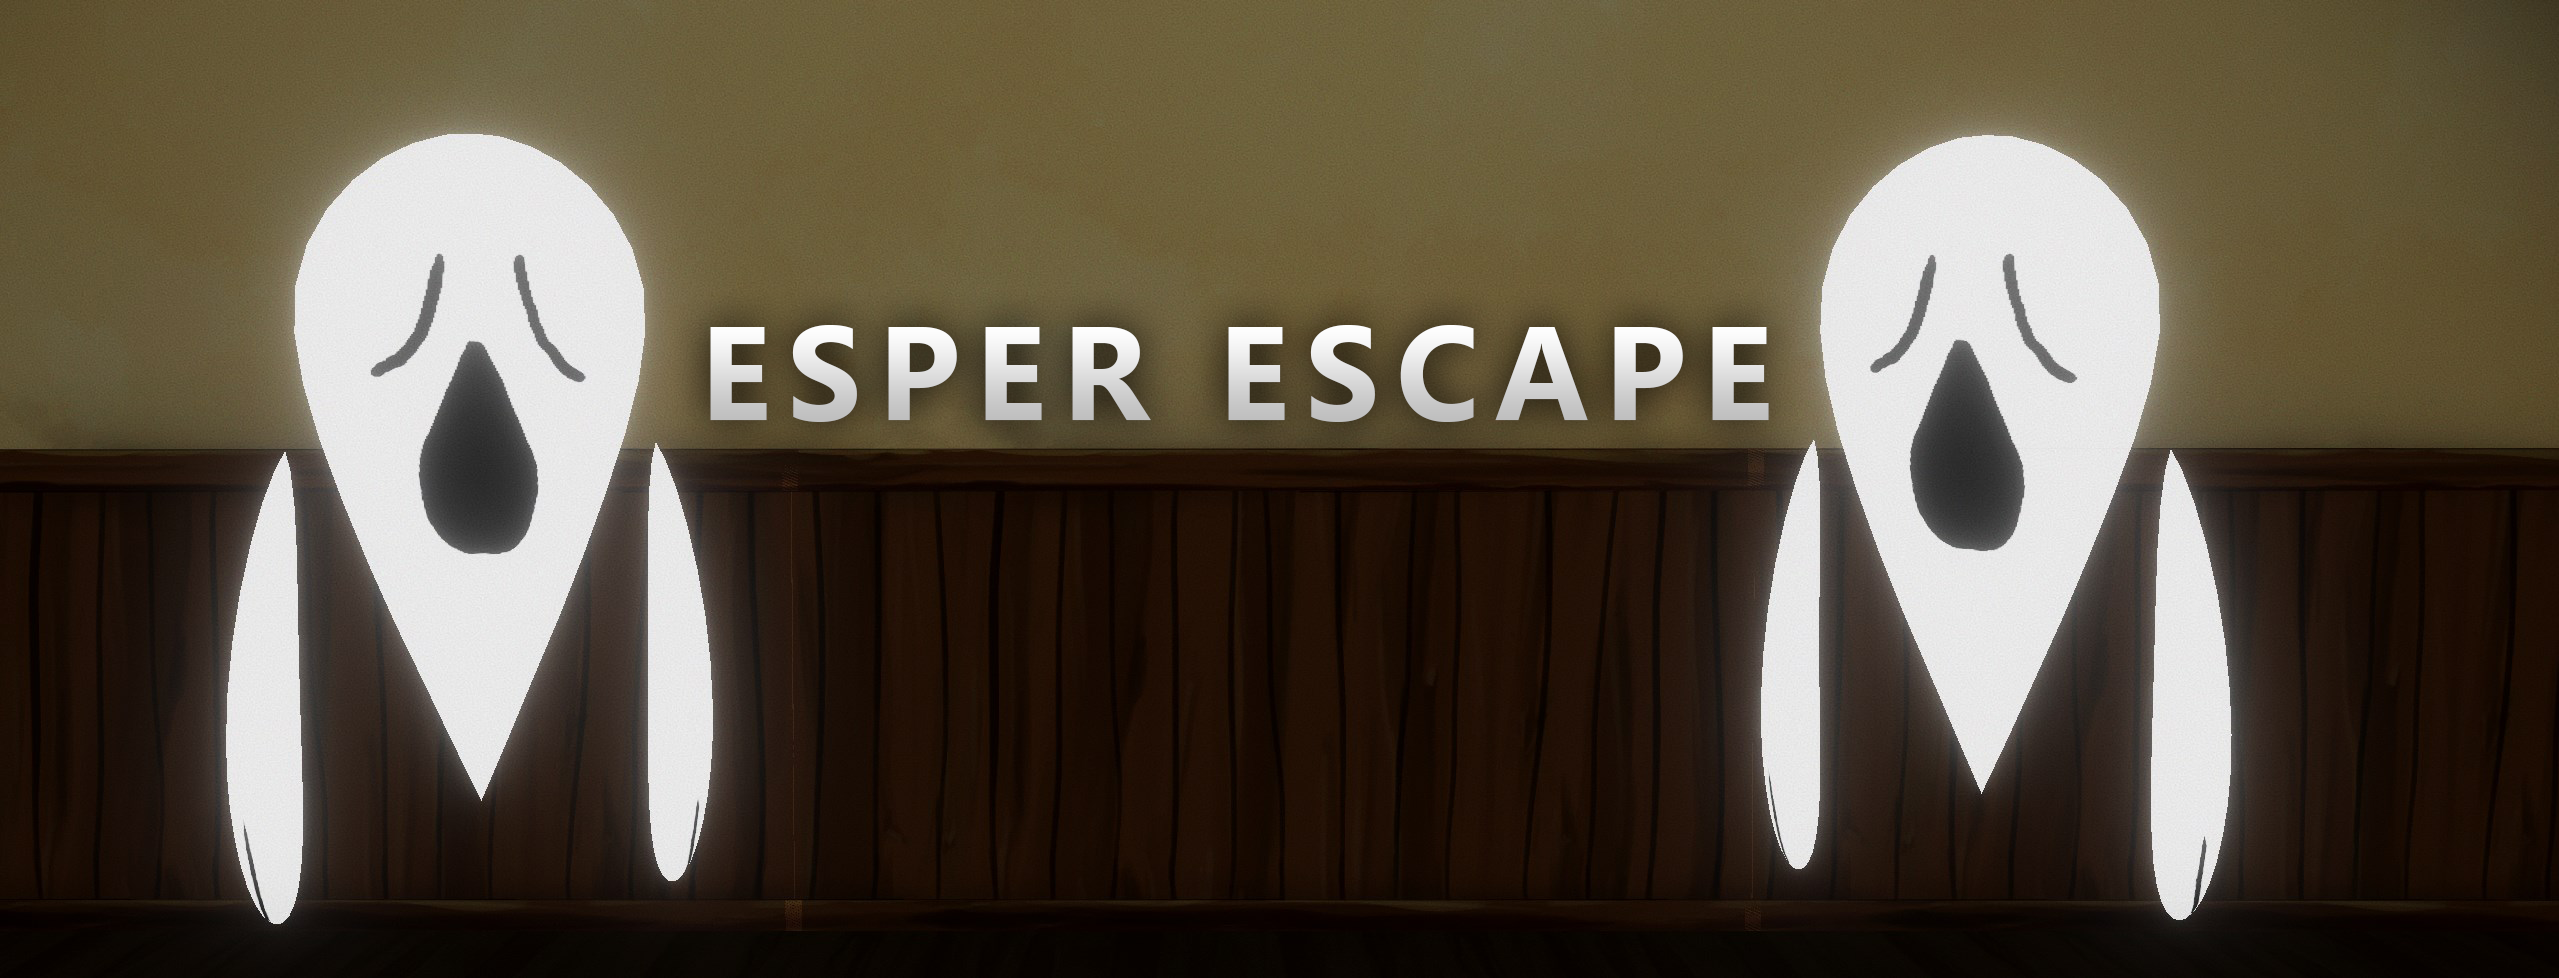 Esper Escape